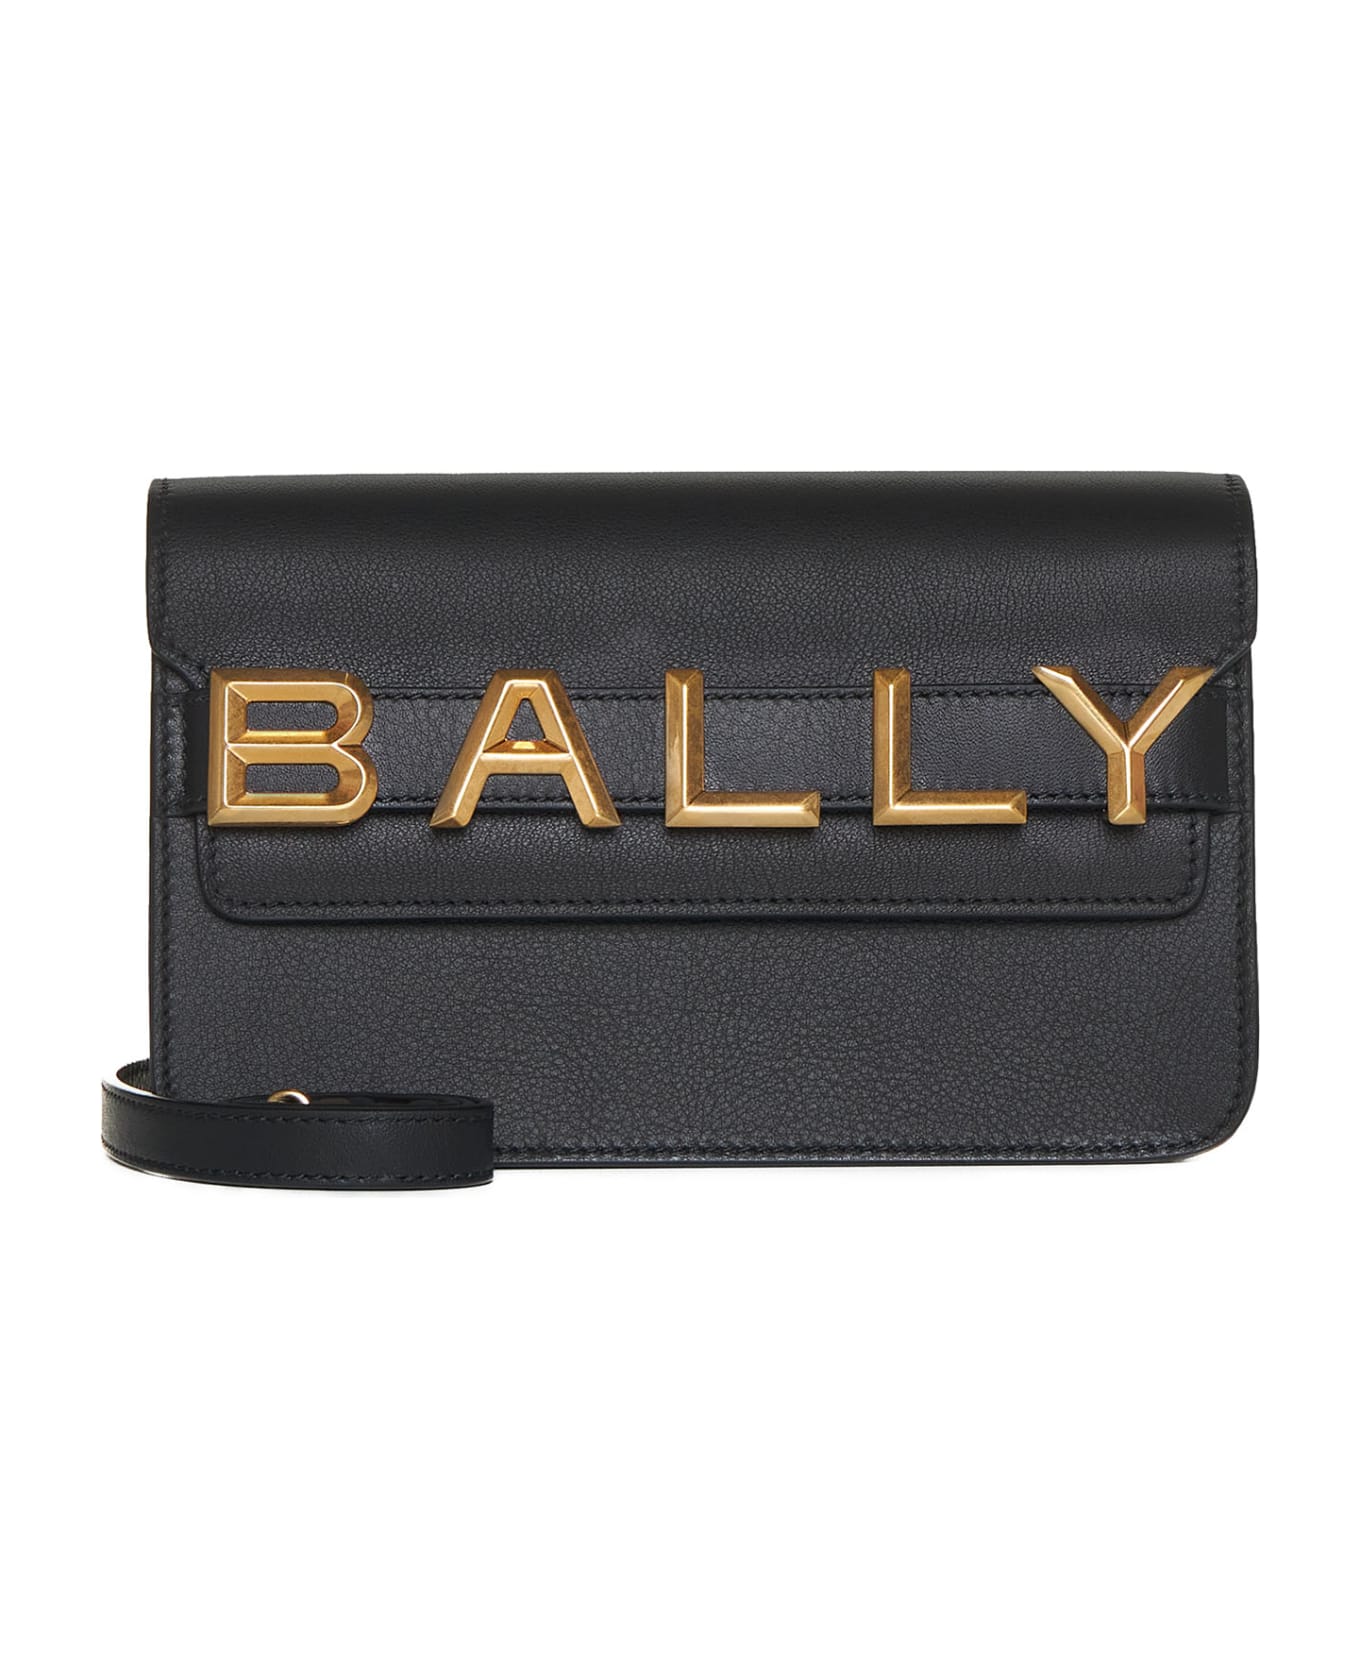 Bally Shoulder Bag - Black+oro